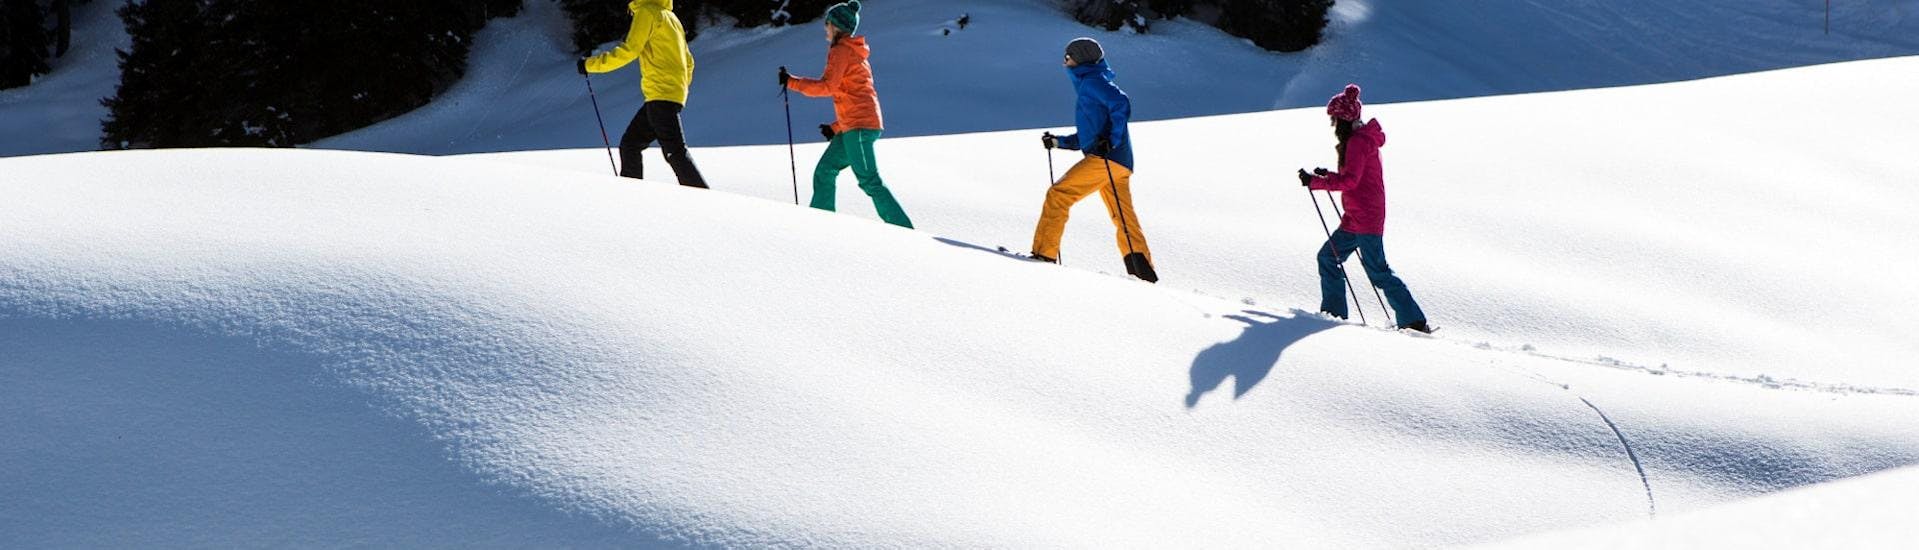 Snowshoeing Private - Silvretta Montafon - All Levels with Skischule Gaschurn-Partenen - Hero image